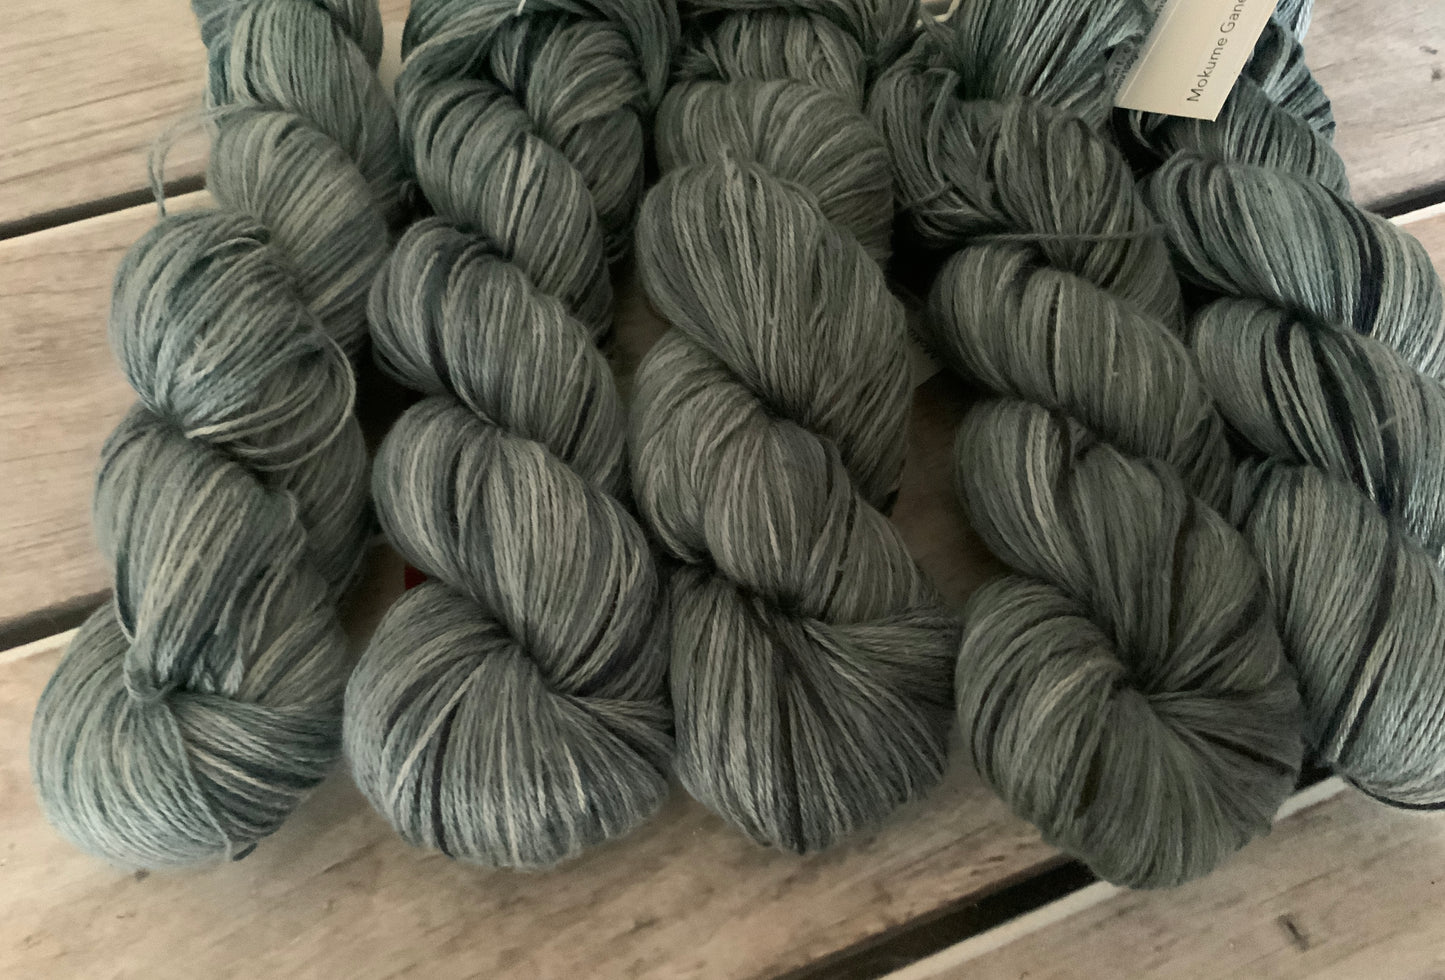 Mokume Gane on Linden - 4 ply silk and linen yarn